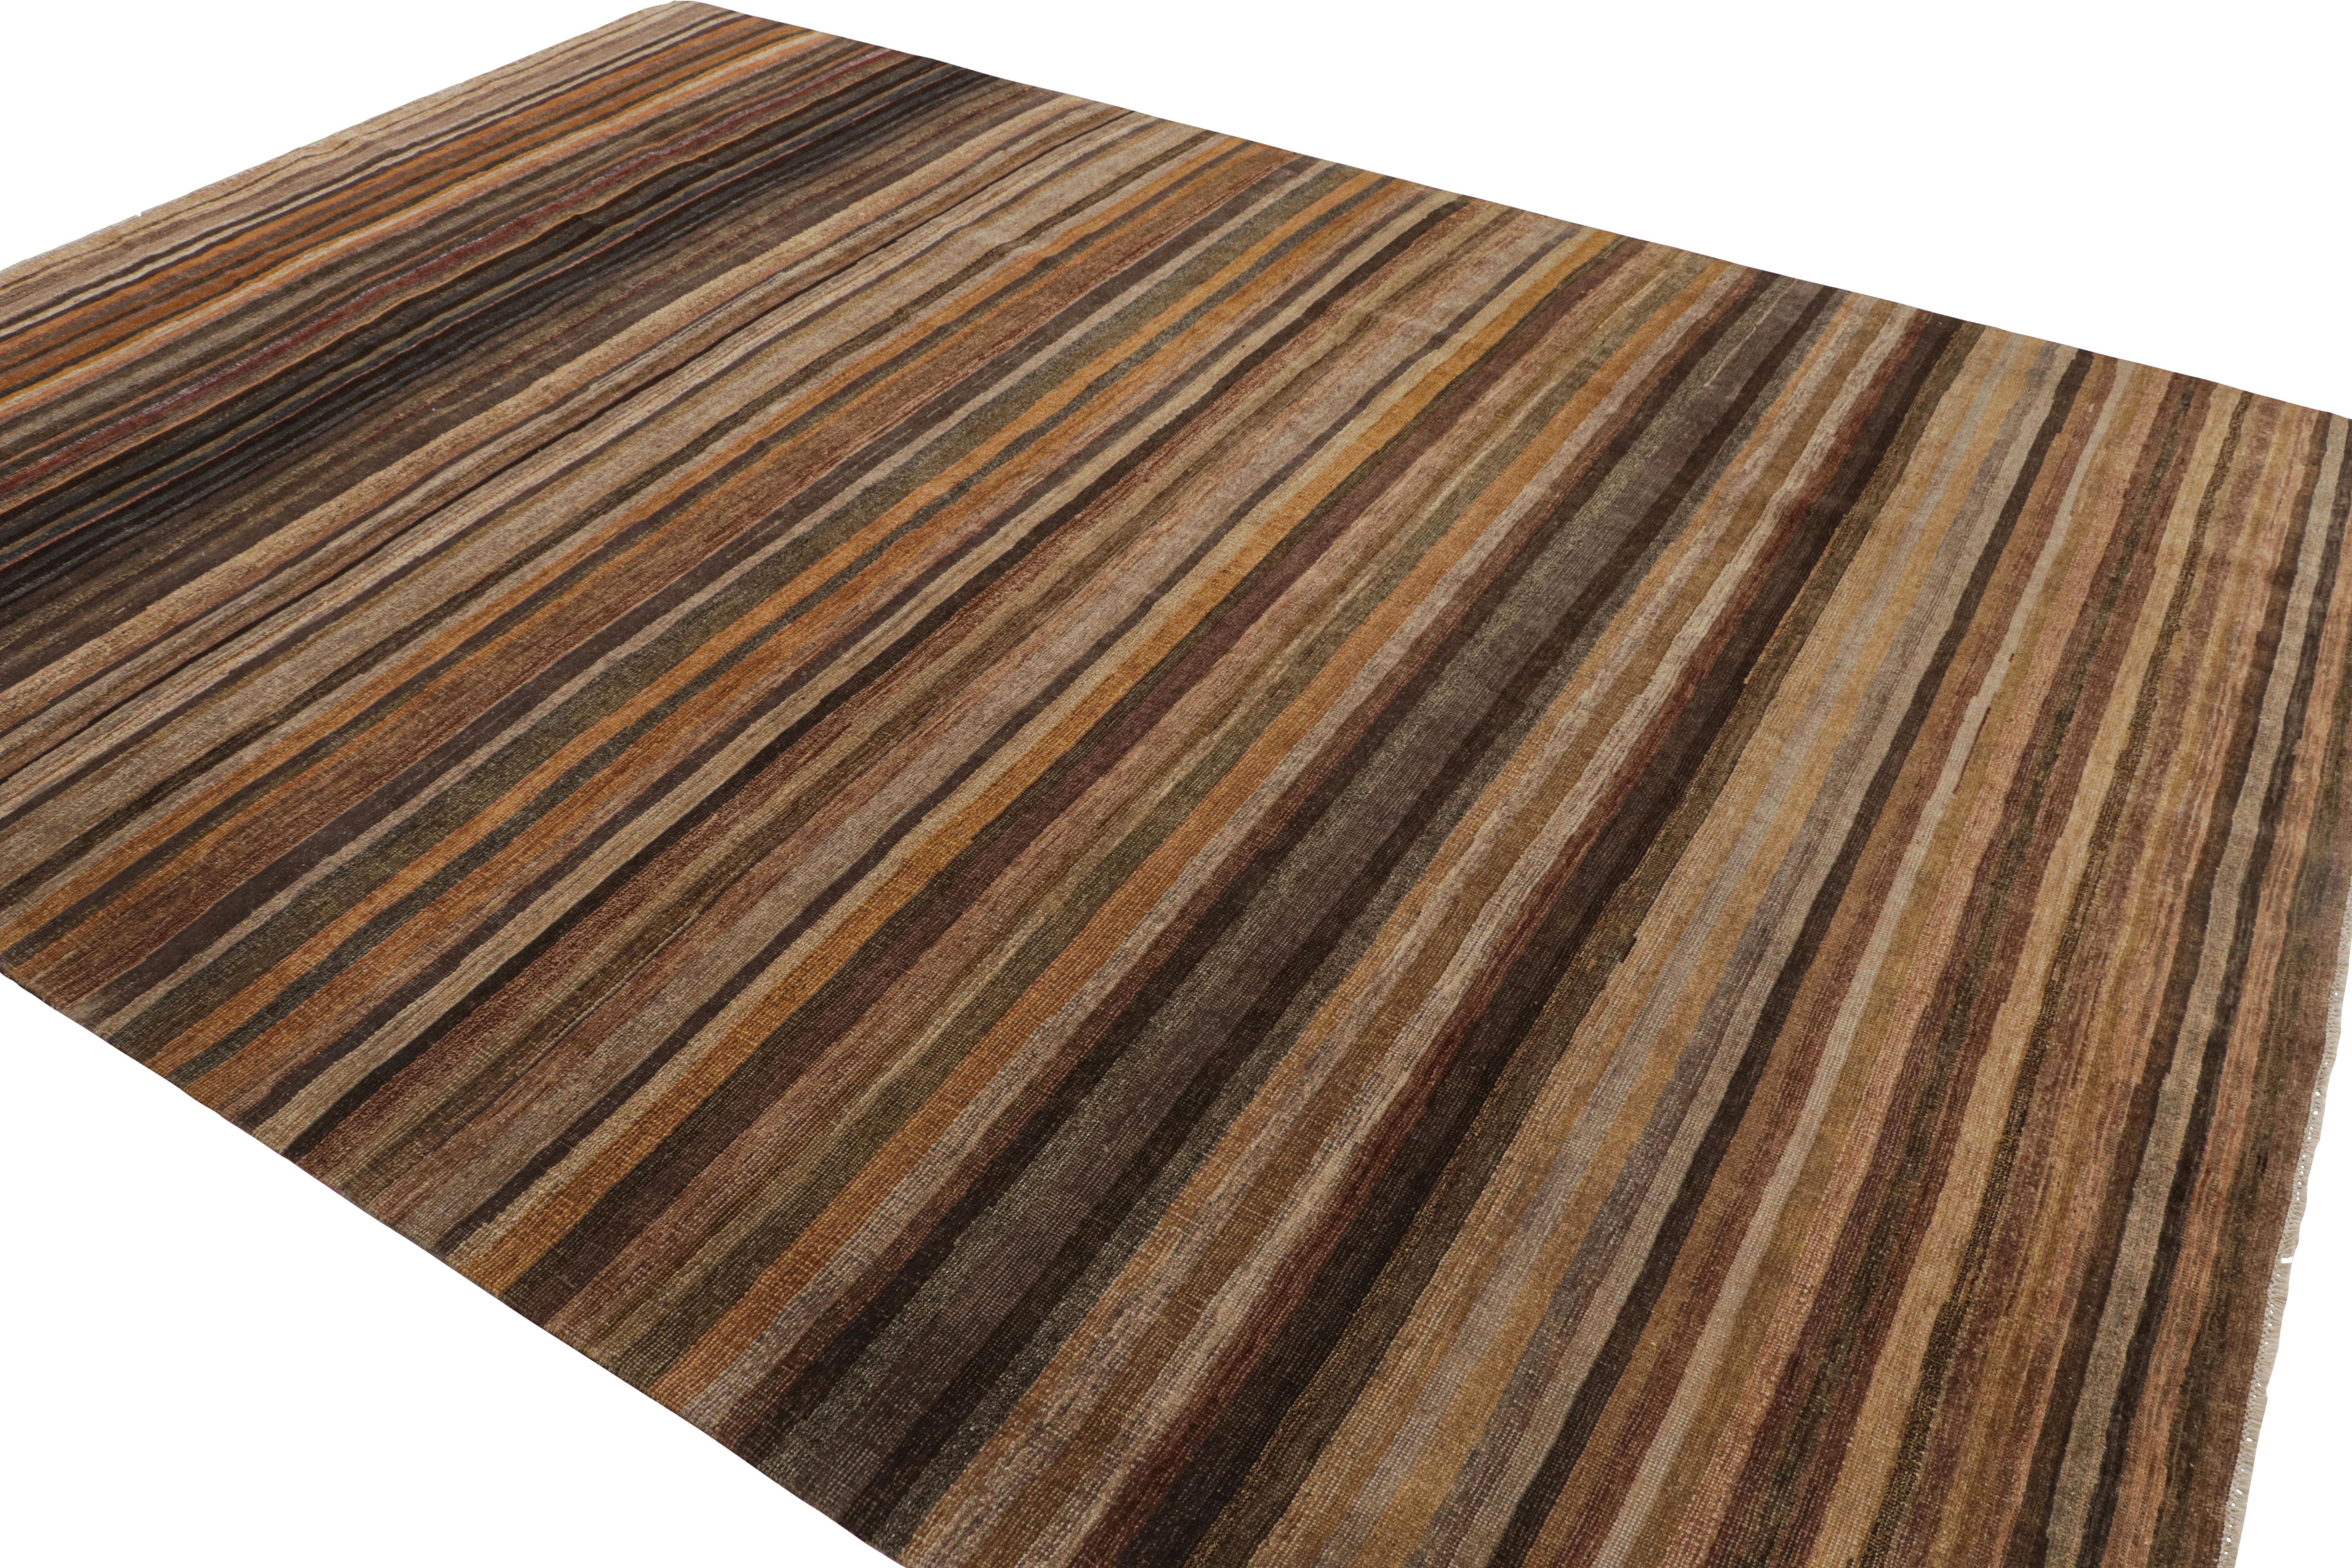 Indien Rug & Kilim's Textural Rug in Beige-Brown Stripes and Striae (tapis texturé à rayures beige et marron) en vente